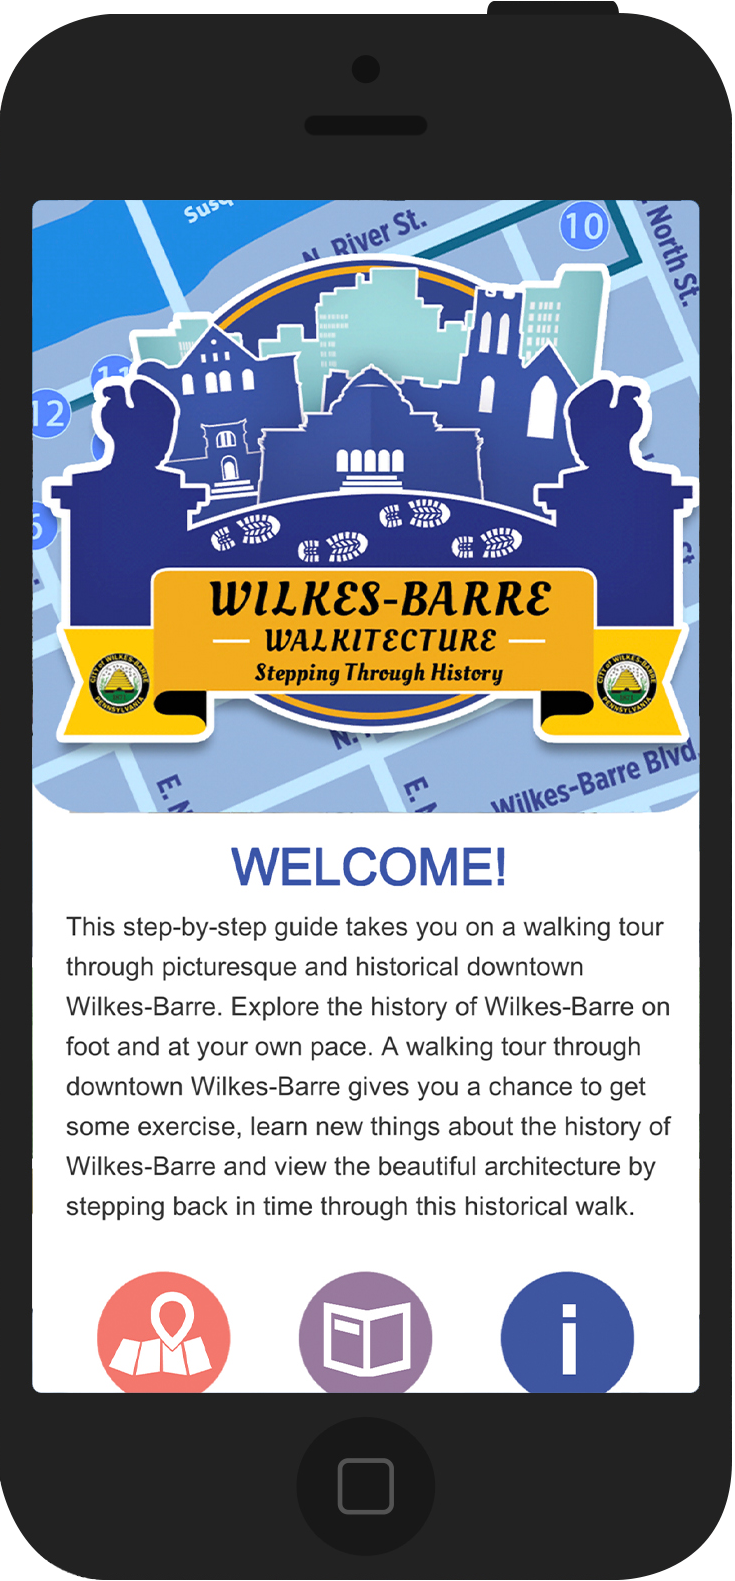 Wilkes-Barre Walkitecture app home screen